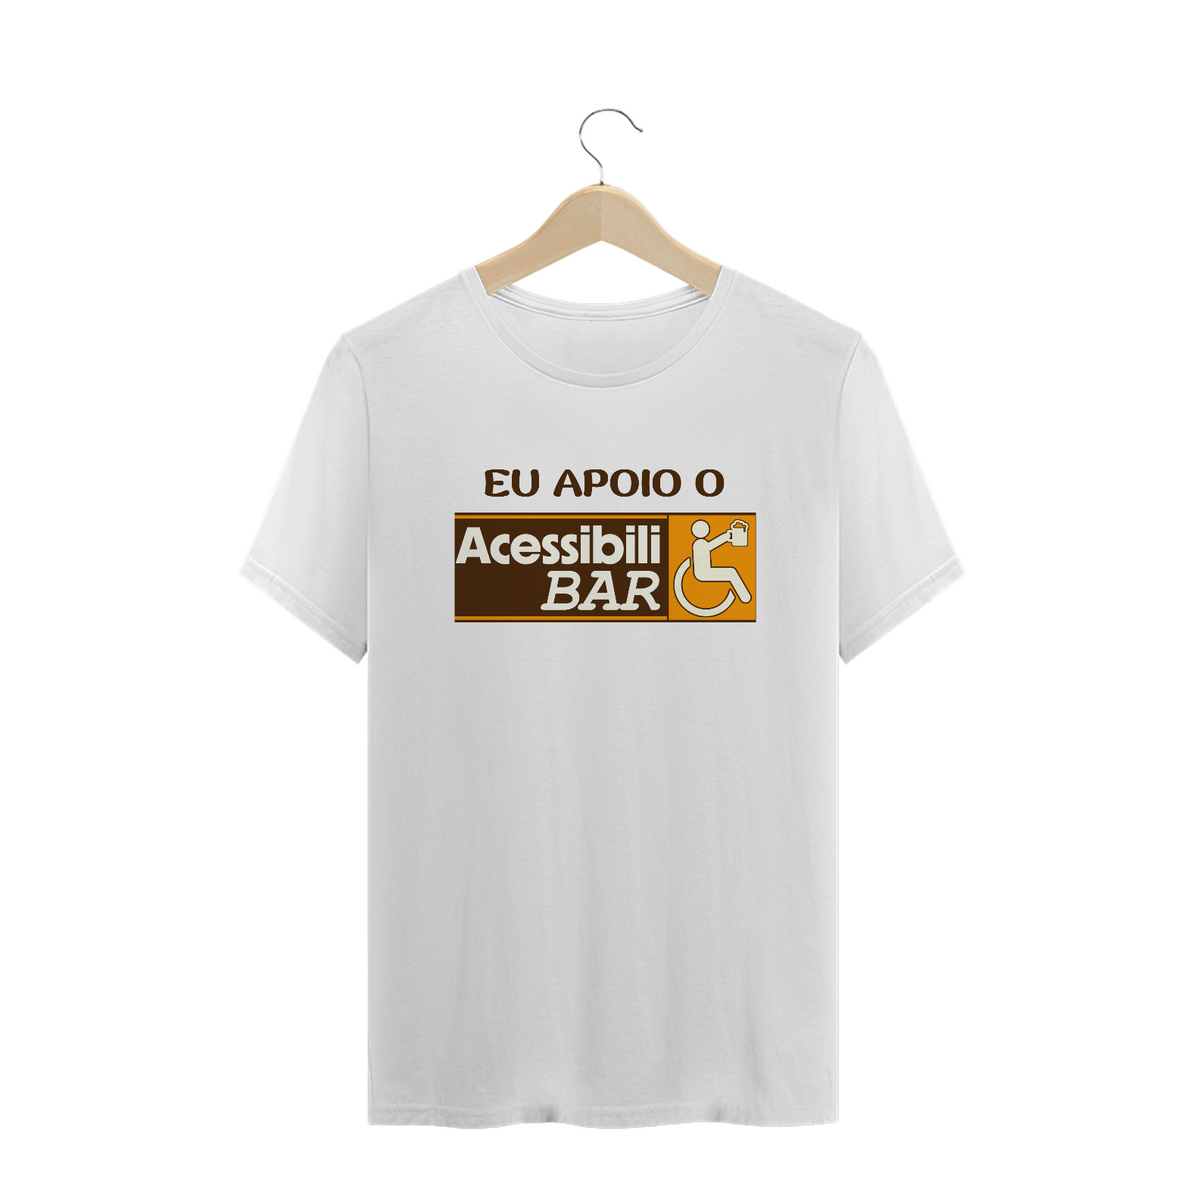 Nome do produto: Camiseta plus size - Eu Apoio o AcessibiliBAR (clara)